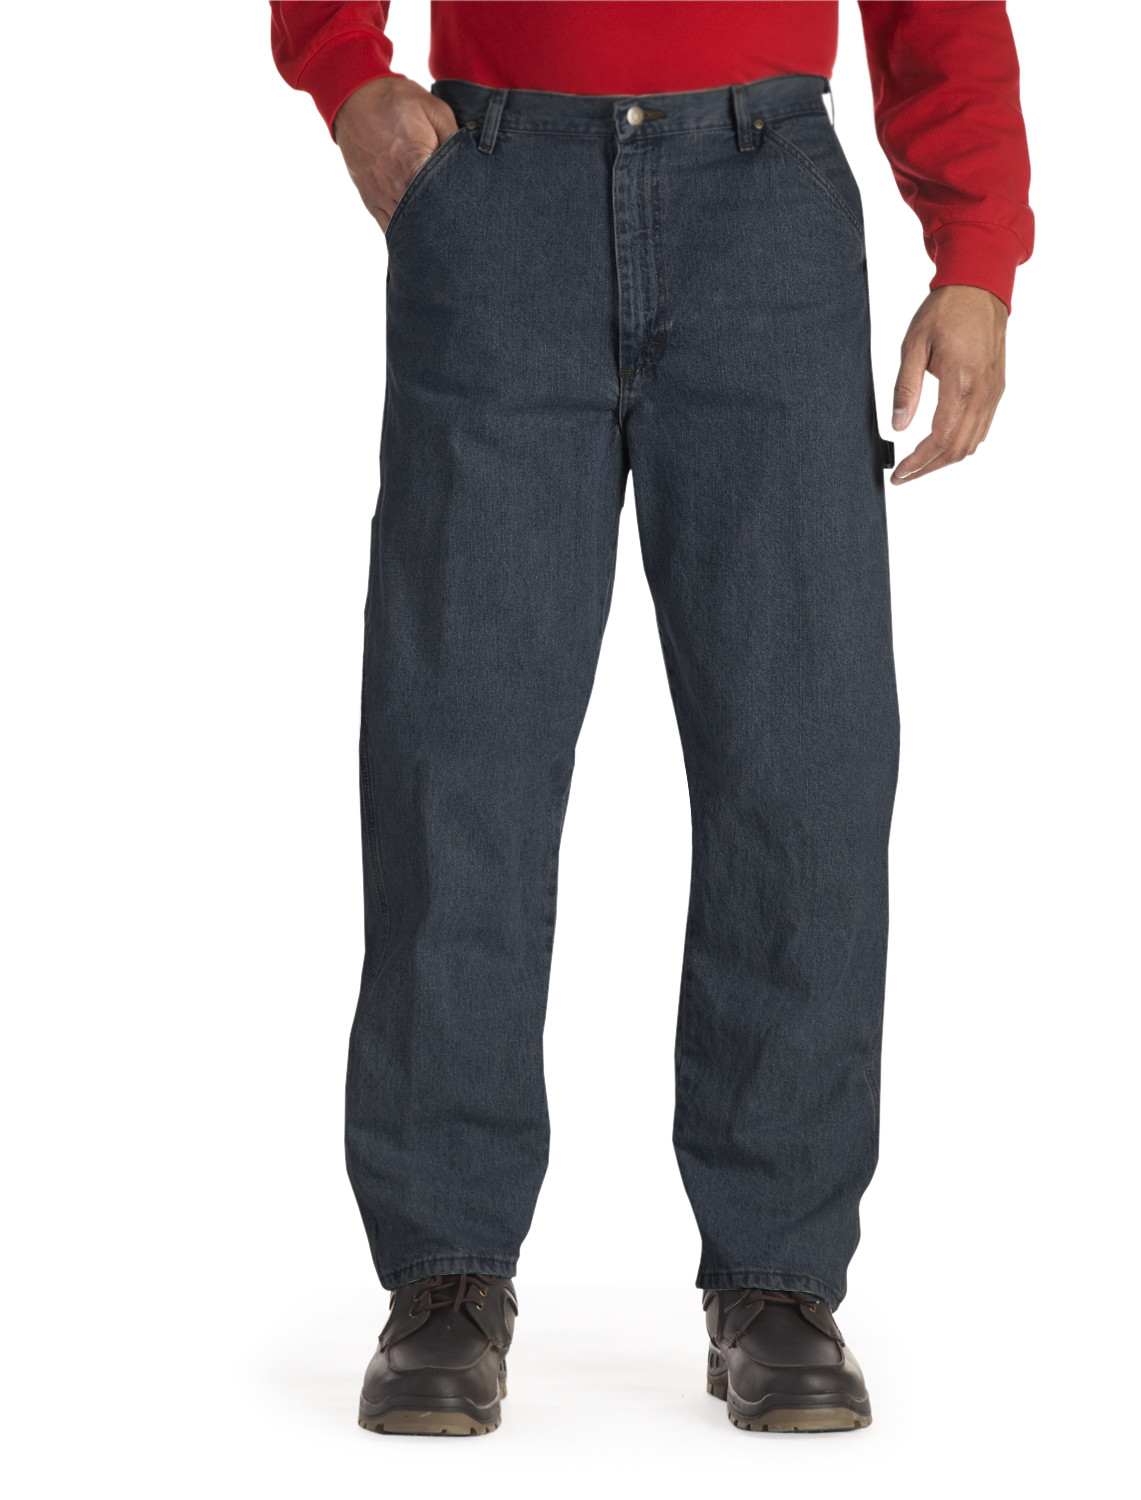 Wrangler Rugged Wear Carpenter Jeans Casual Male XL Big & Tall | eBay